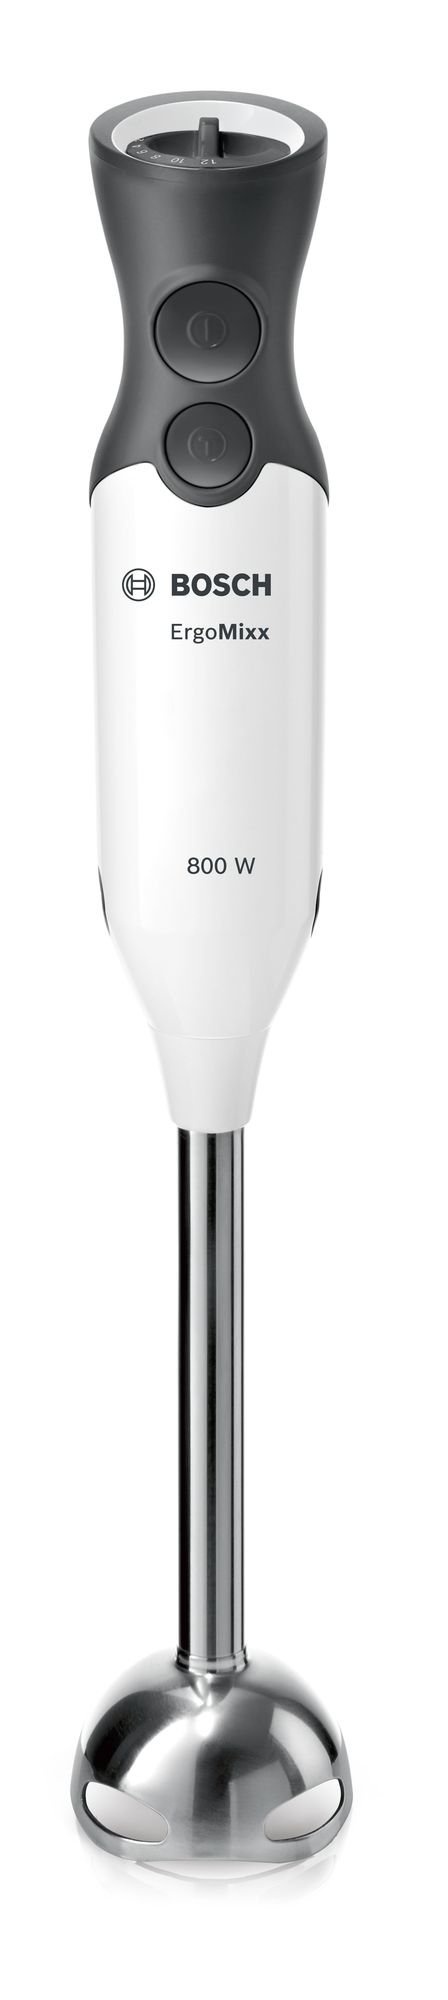 Bosch ErgoMixx MS61A4110 Varinha mágica 800 W